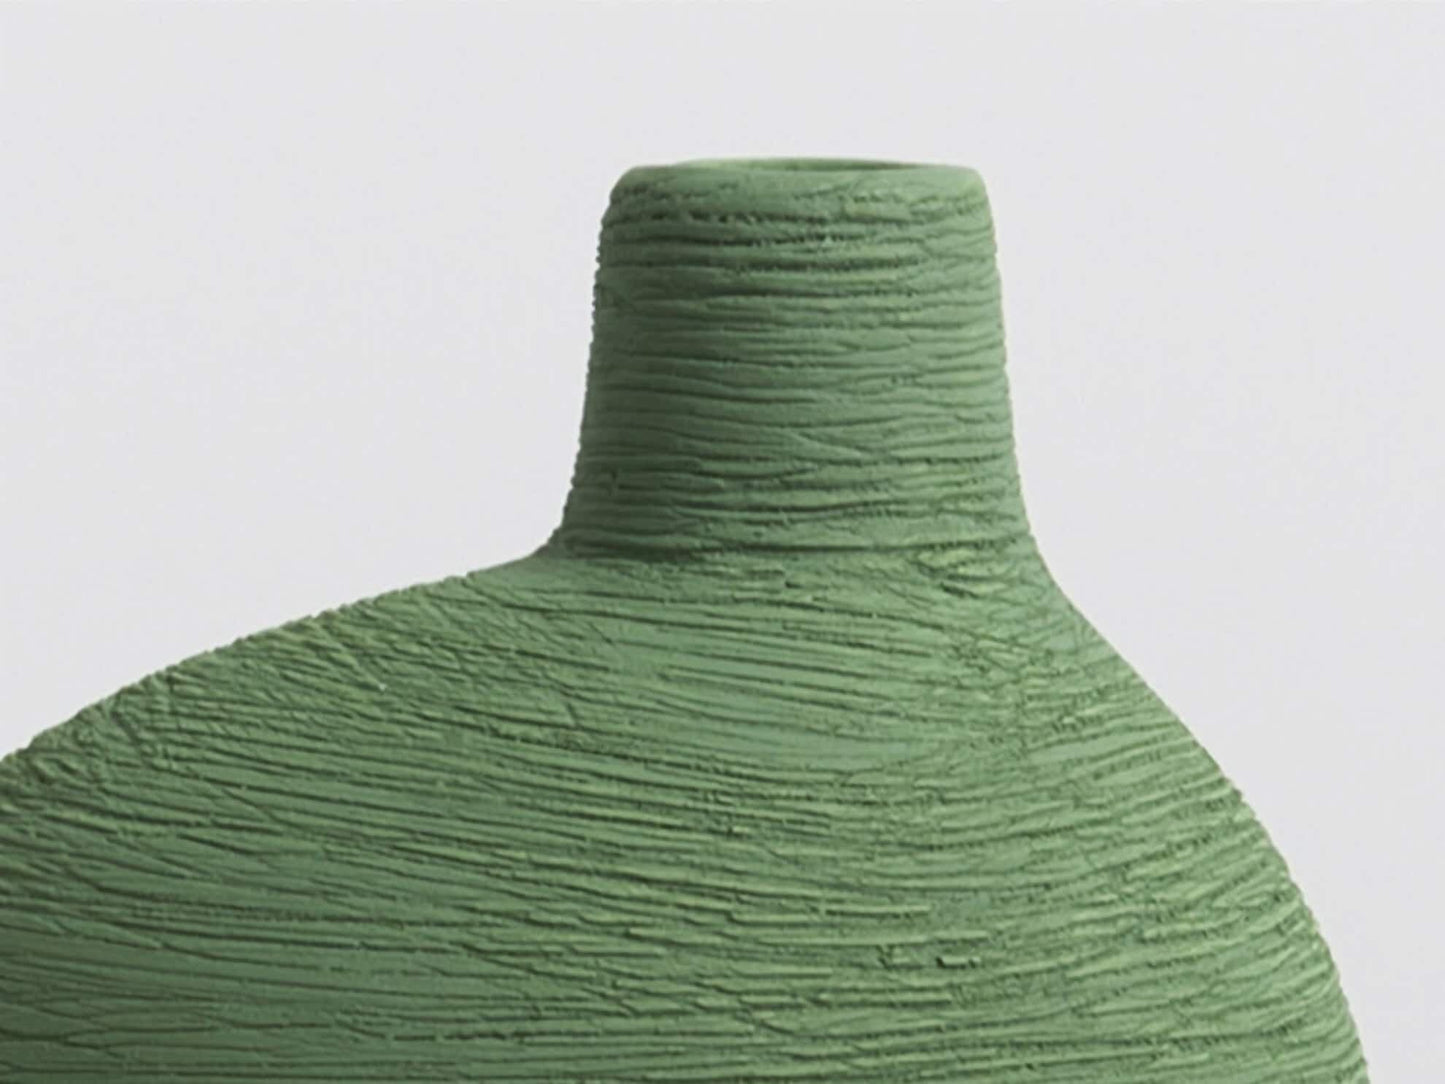 Nordic Abstract Vase With a Rough Texture | Zen Decor, Ceramic Vase, Minimalist Vase, Vases for Flowers, Flower Pots, - -